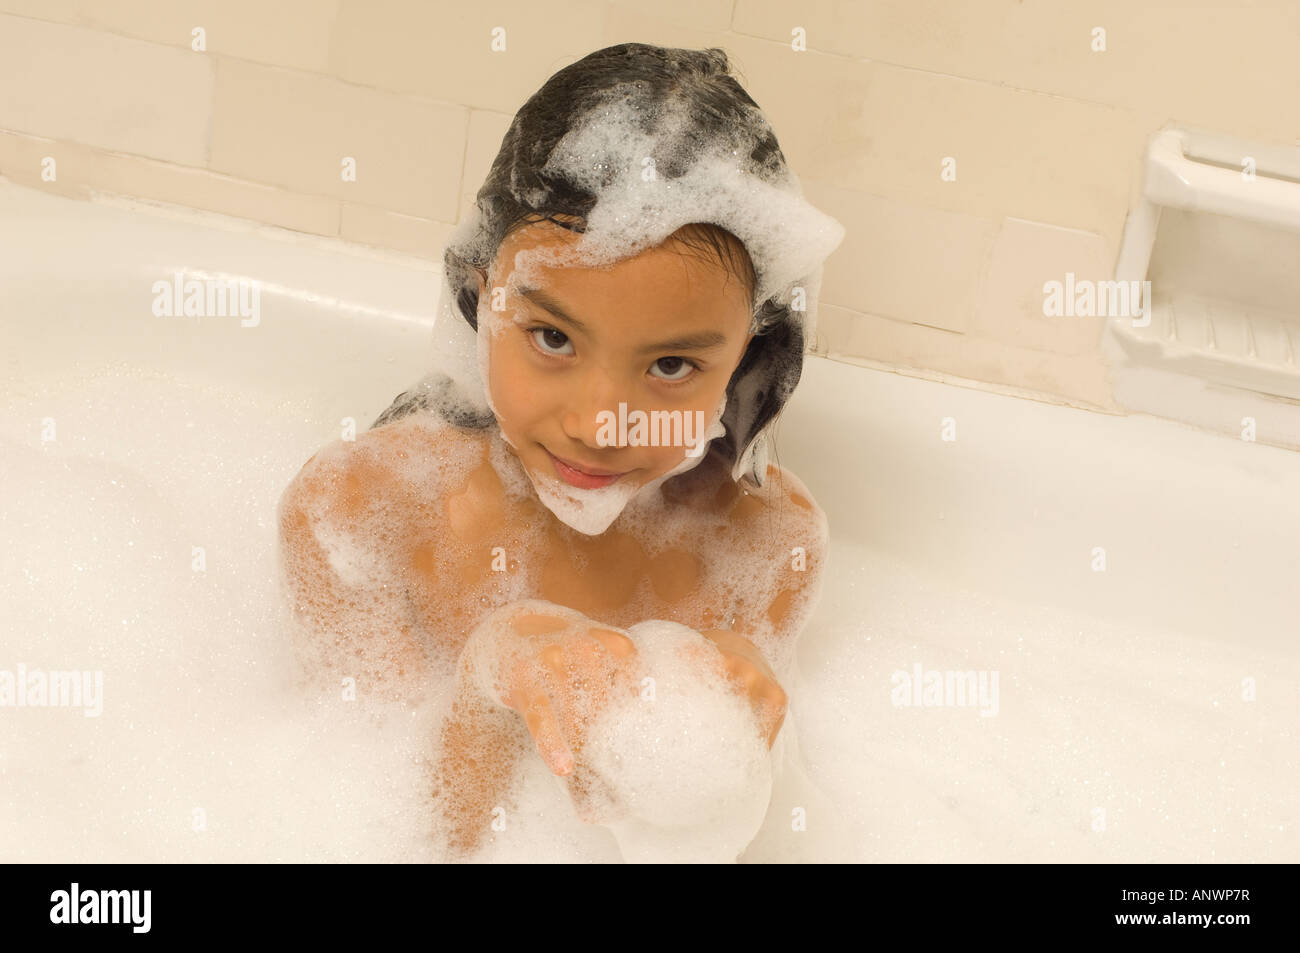 american girl bathtub with bubbles